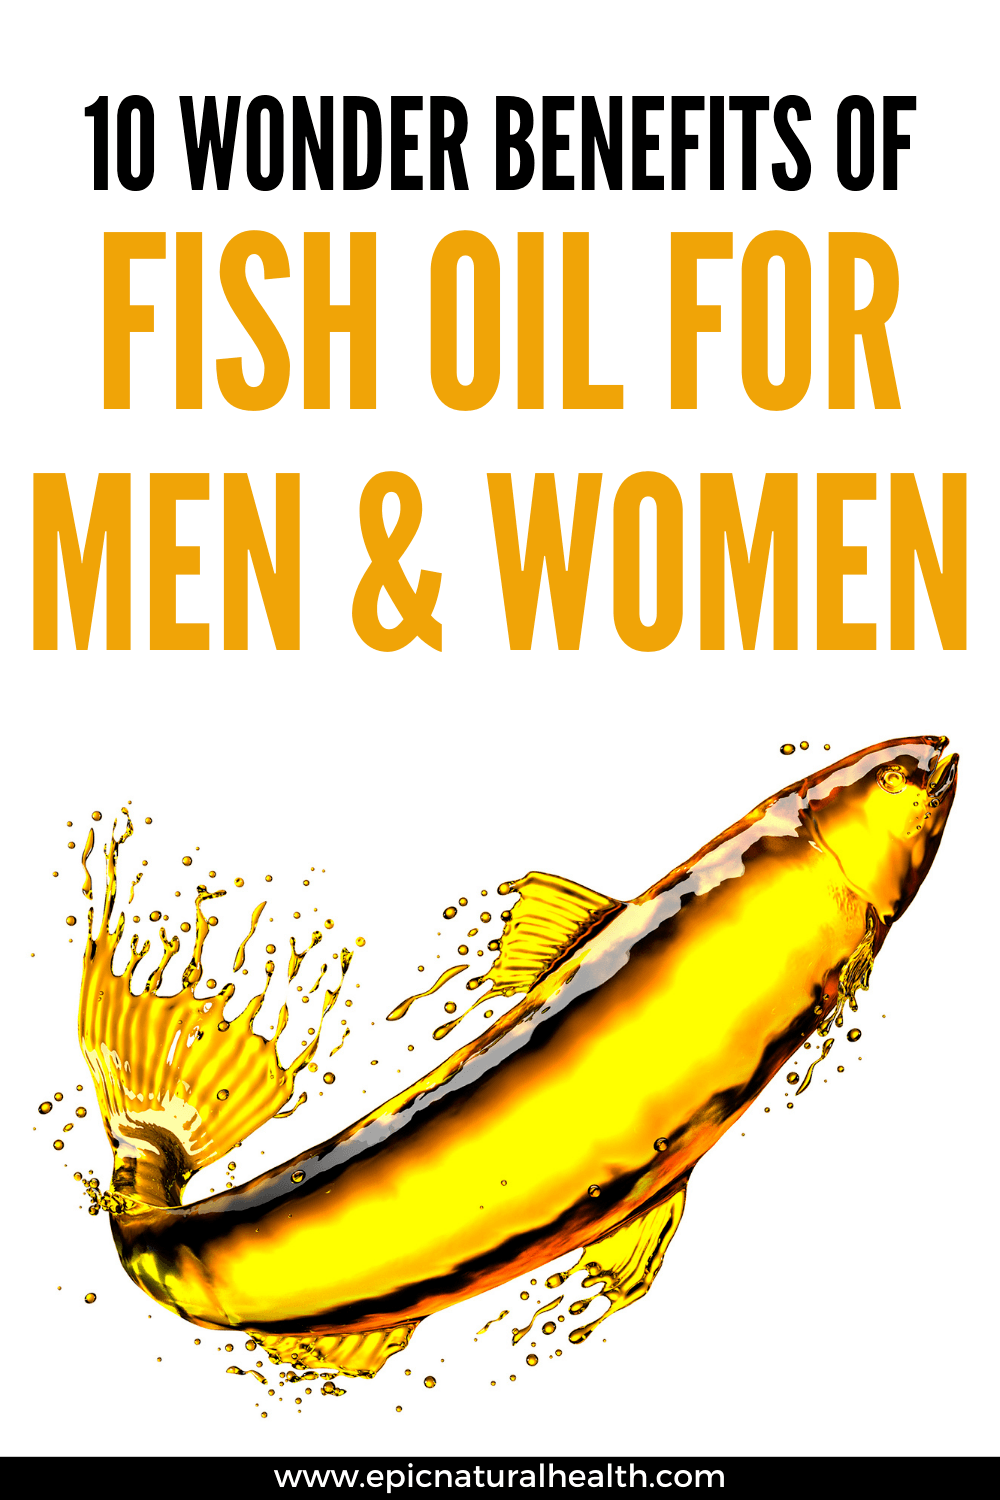 10 Wonder Benefits of Fish Oil for Men & Women